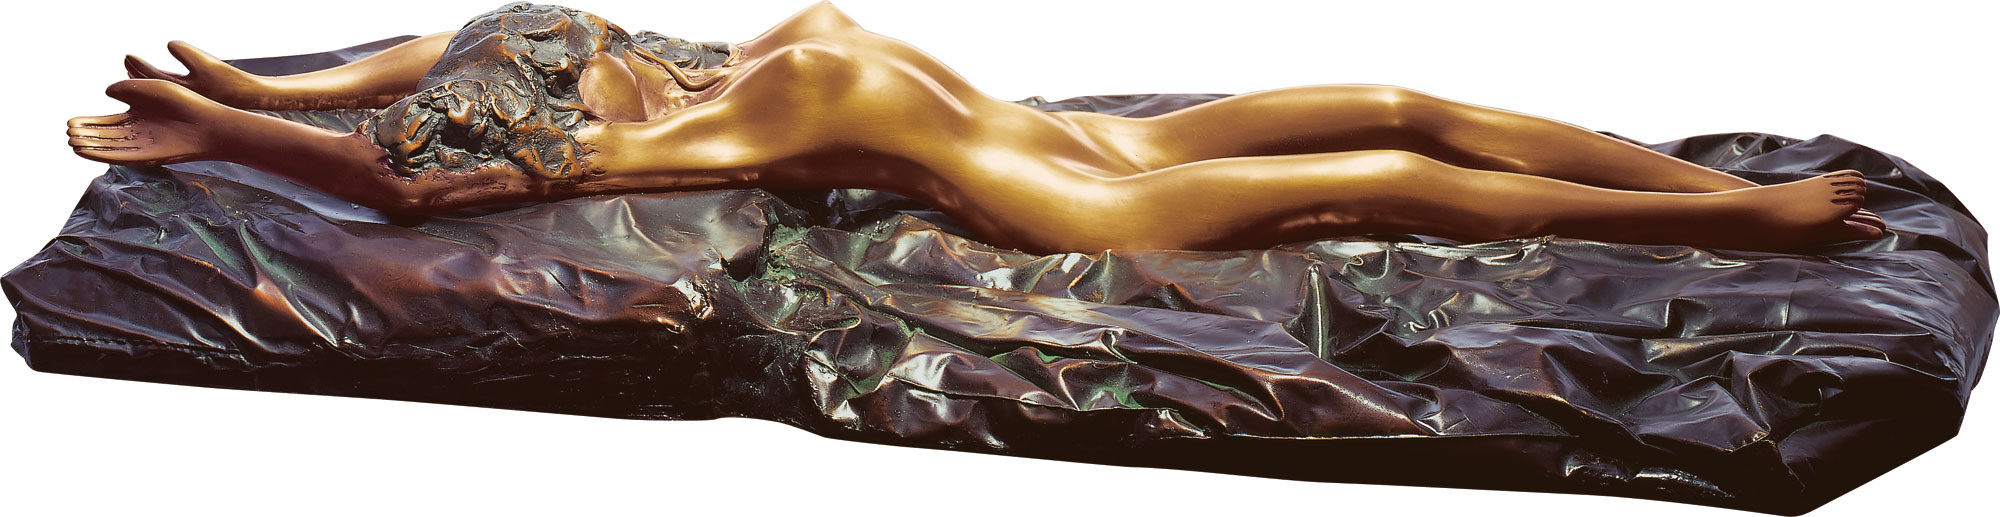 Bruno Bruni: Skulptur 'La Riposata', Bronze